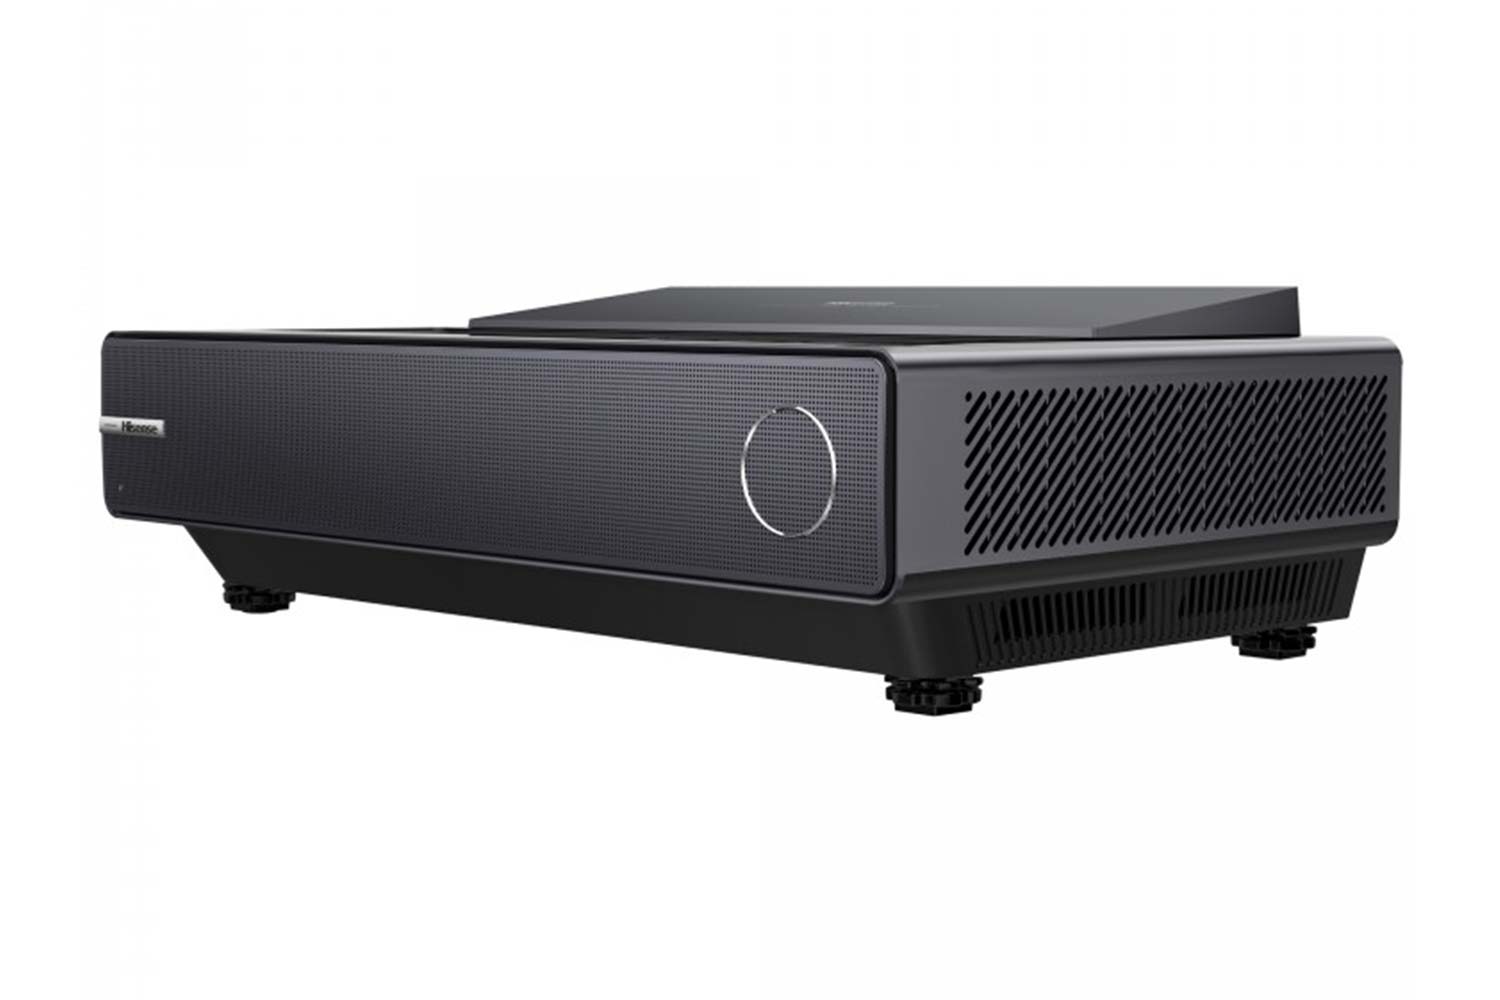 Hisense PX1-Pro TriChroma 4K Ultra HD Laser TV